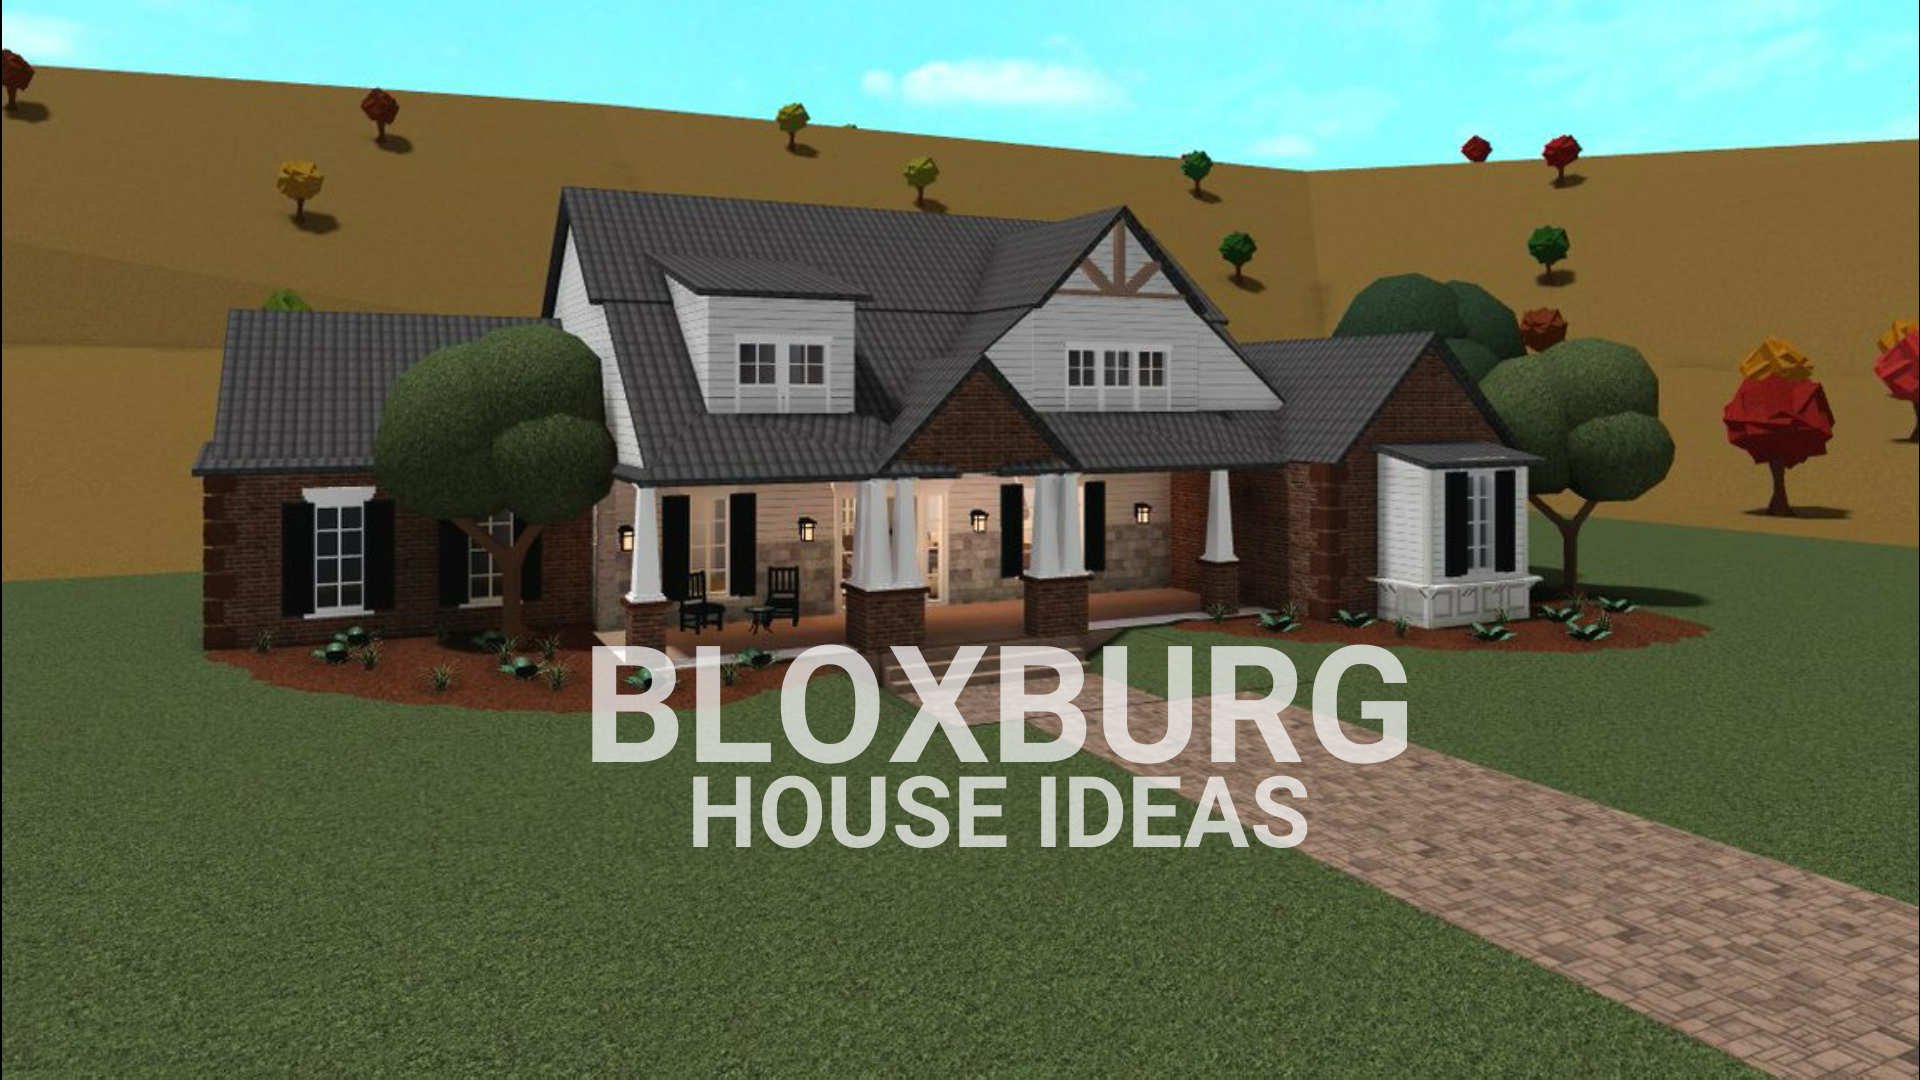 BLOXBURG HOUSE IDEAS: HOW TO BUILD HOUSE IN BLOXBURG